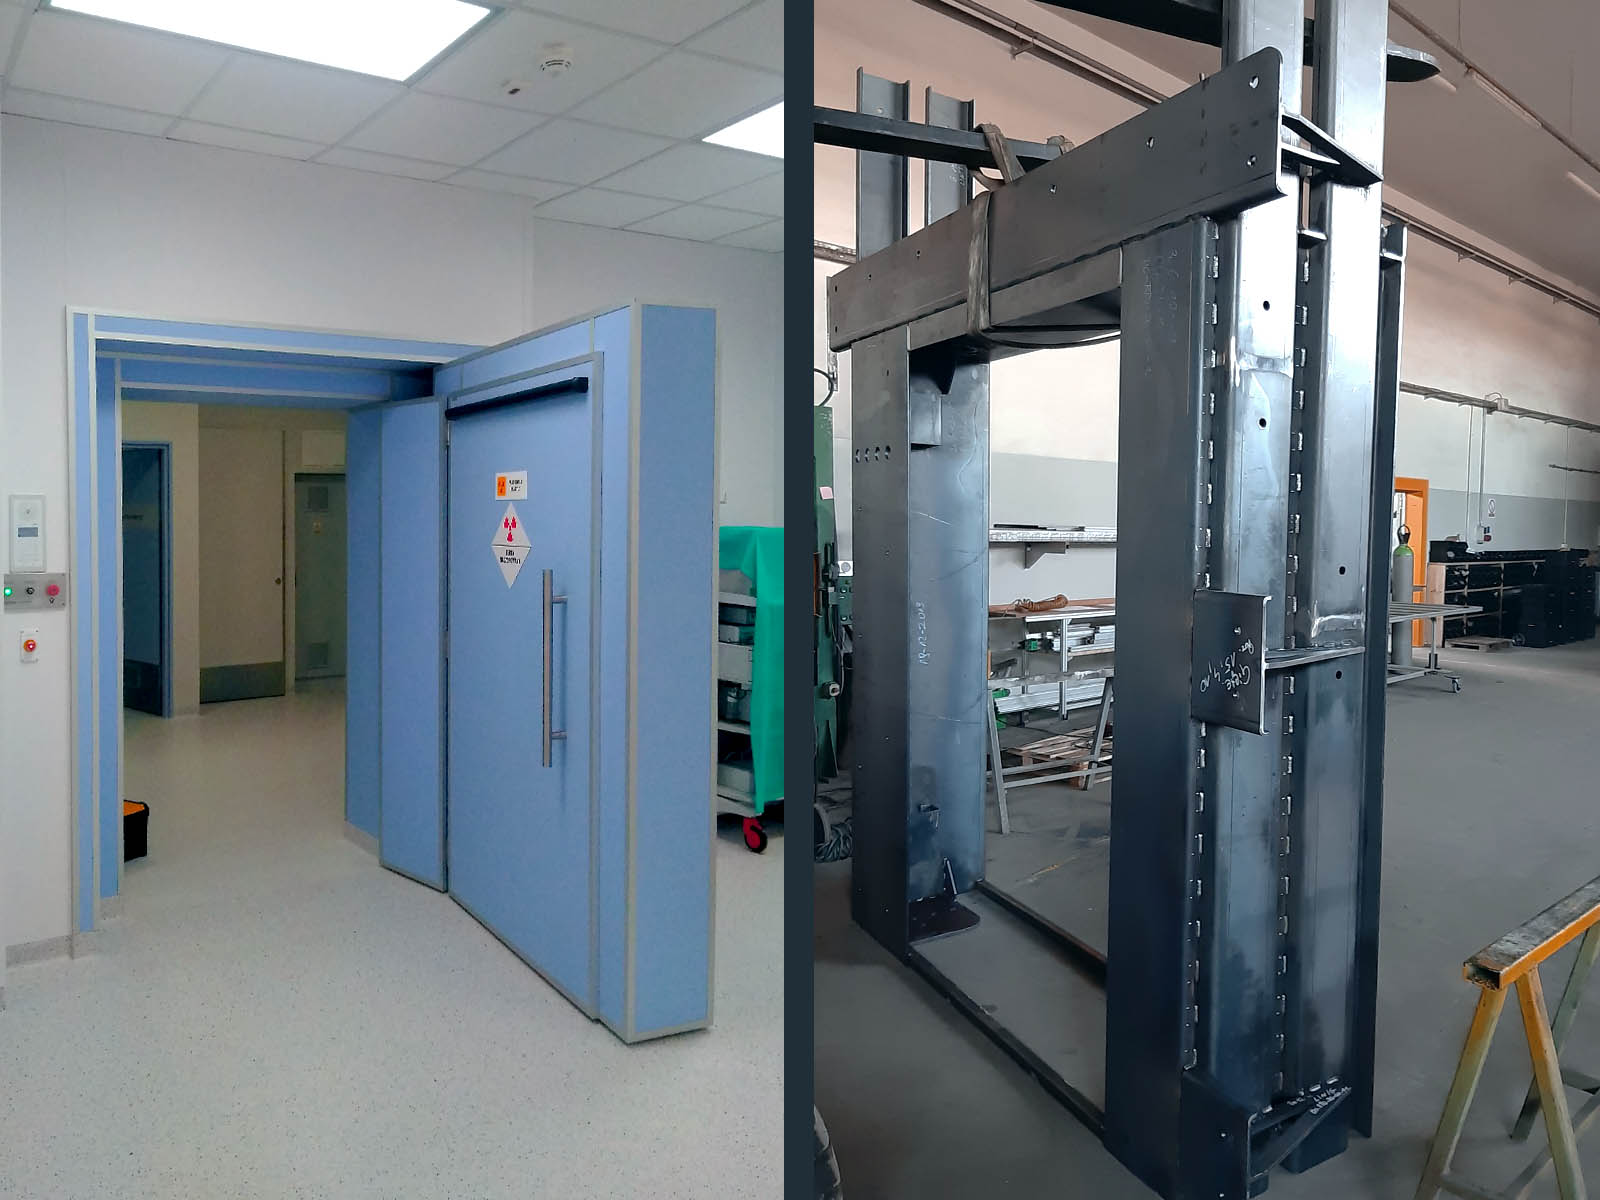 Radiological doors